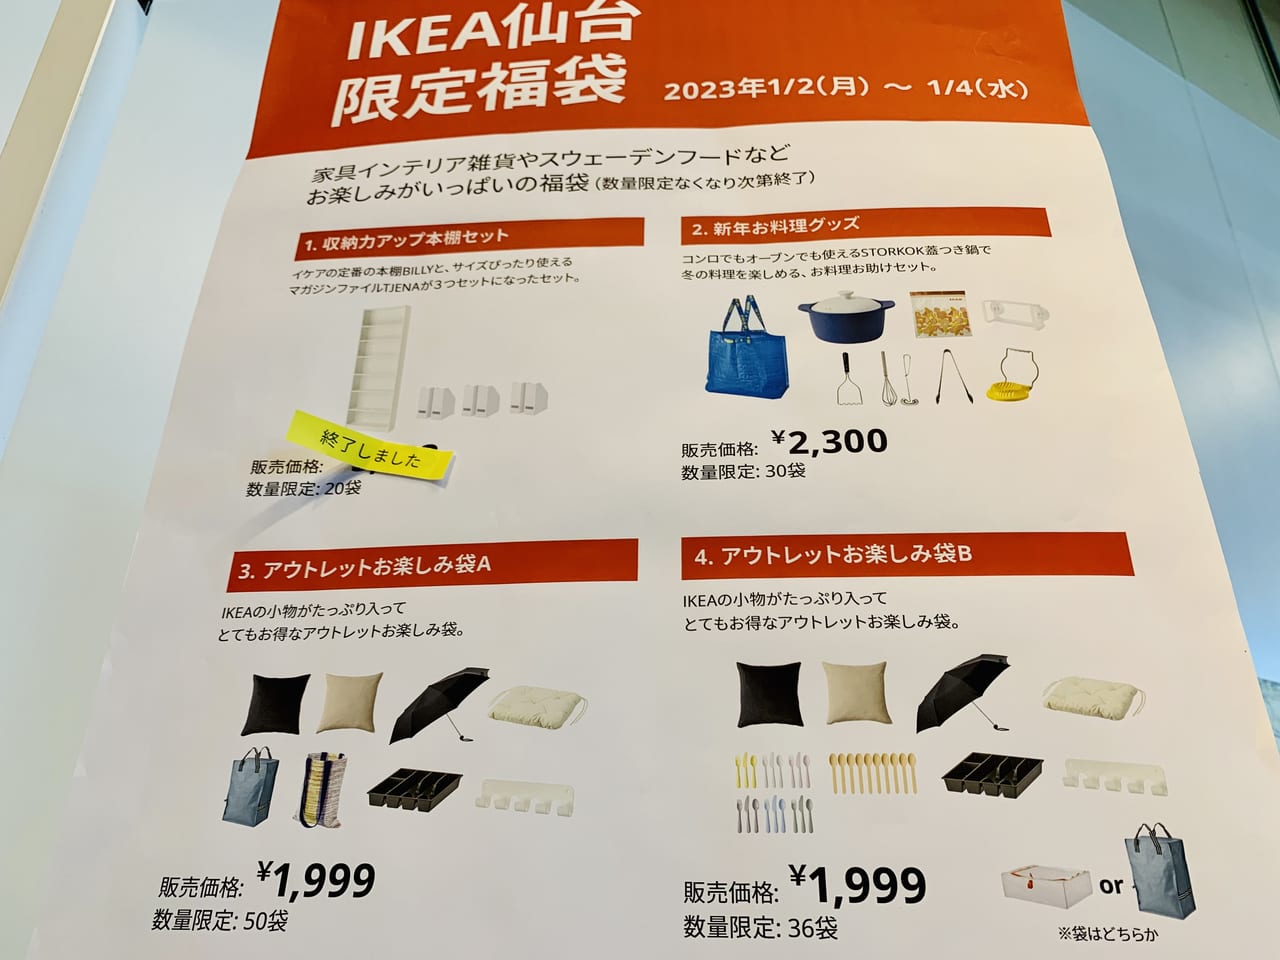 IKEA仙台福袋